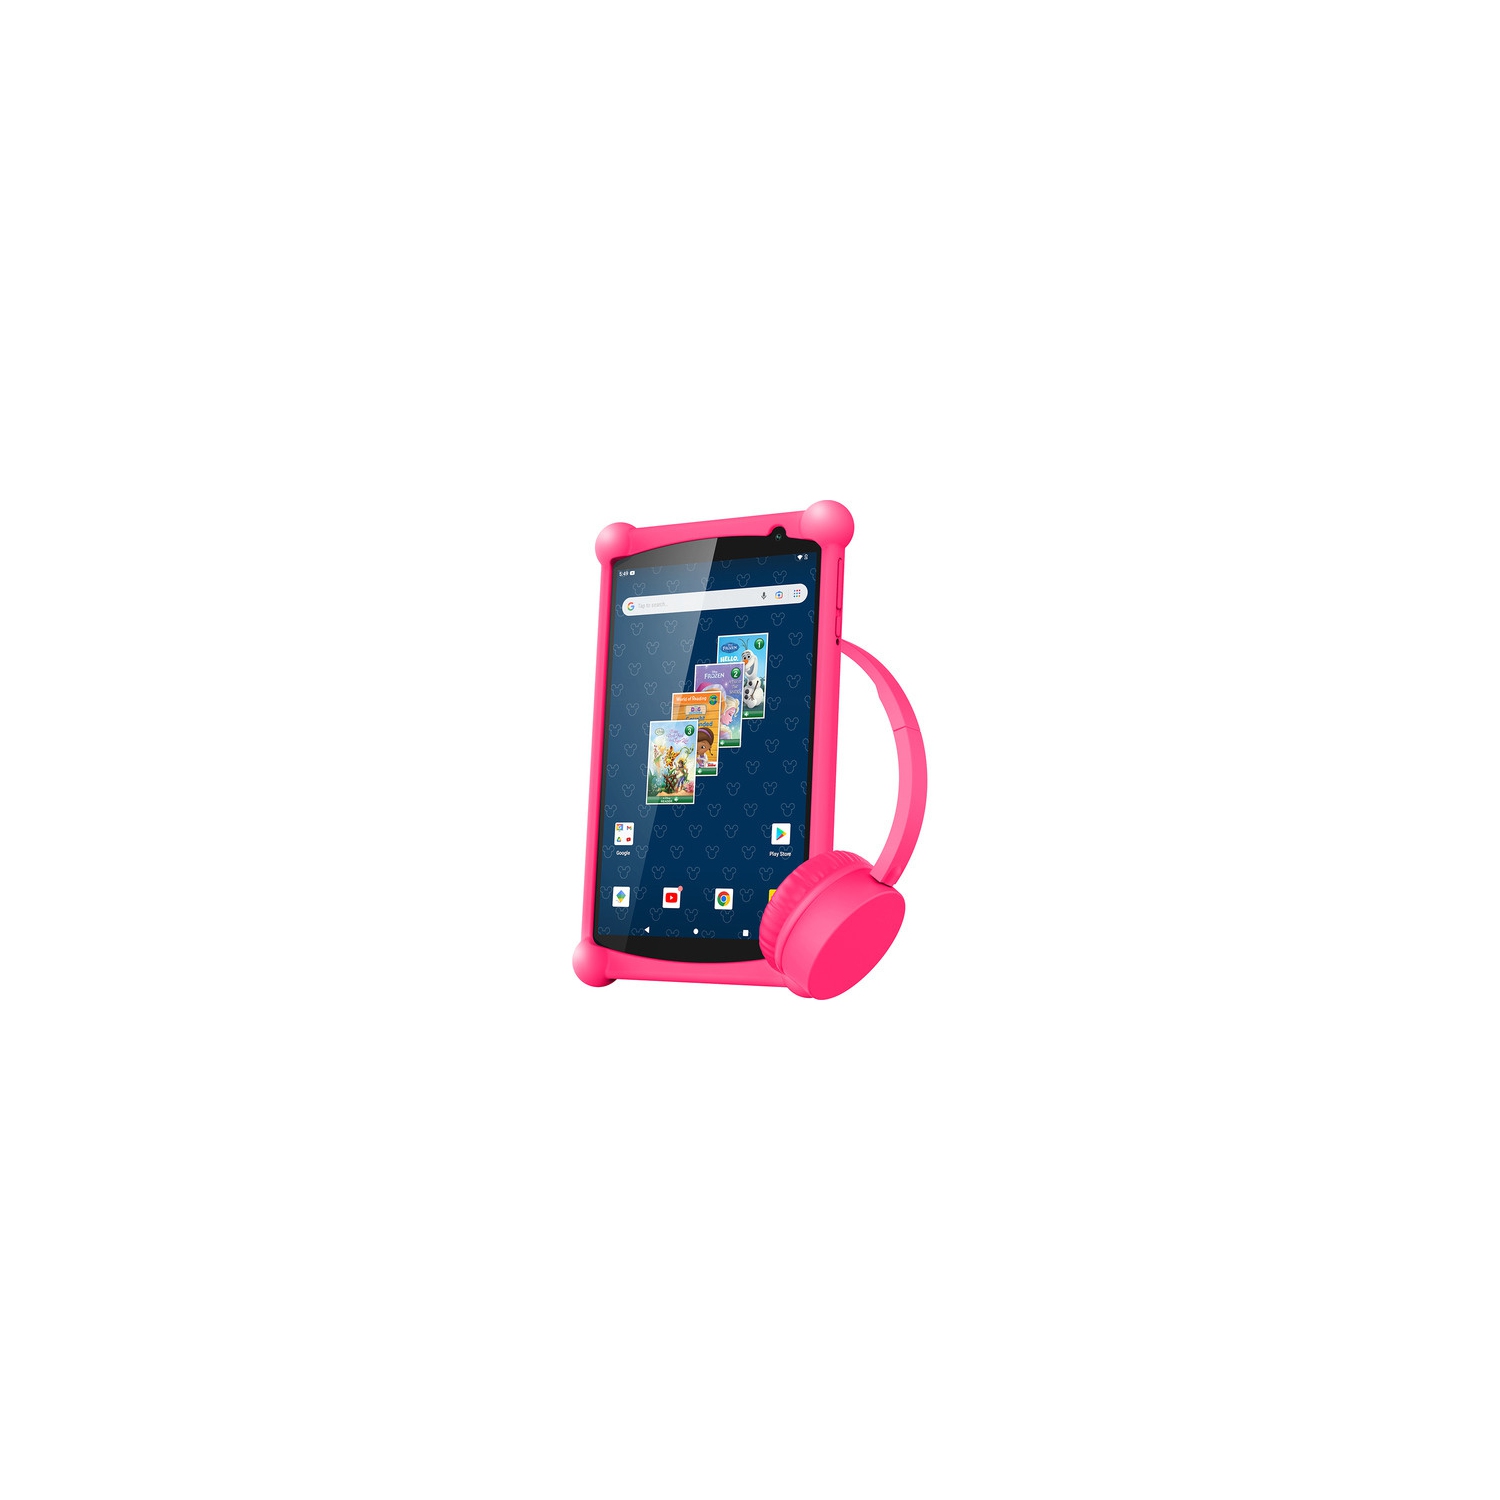 Refurbished (Good) Disney Smartab 8" HD 1GB RAM 16 GB Storage Android Tablet Bundle with Headphones and Bumper Case, Pink